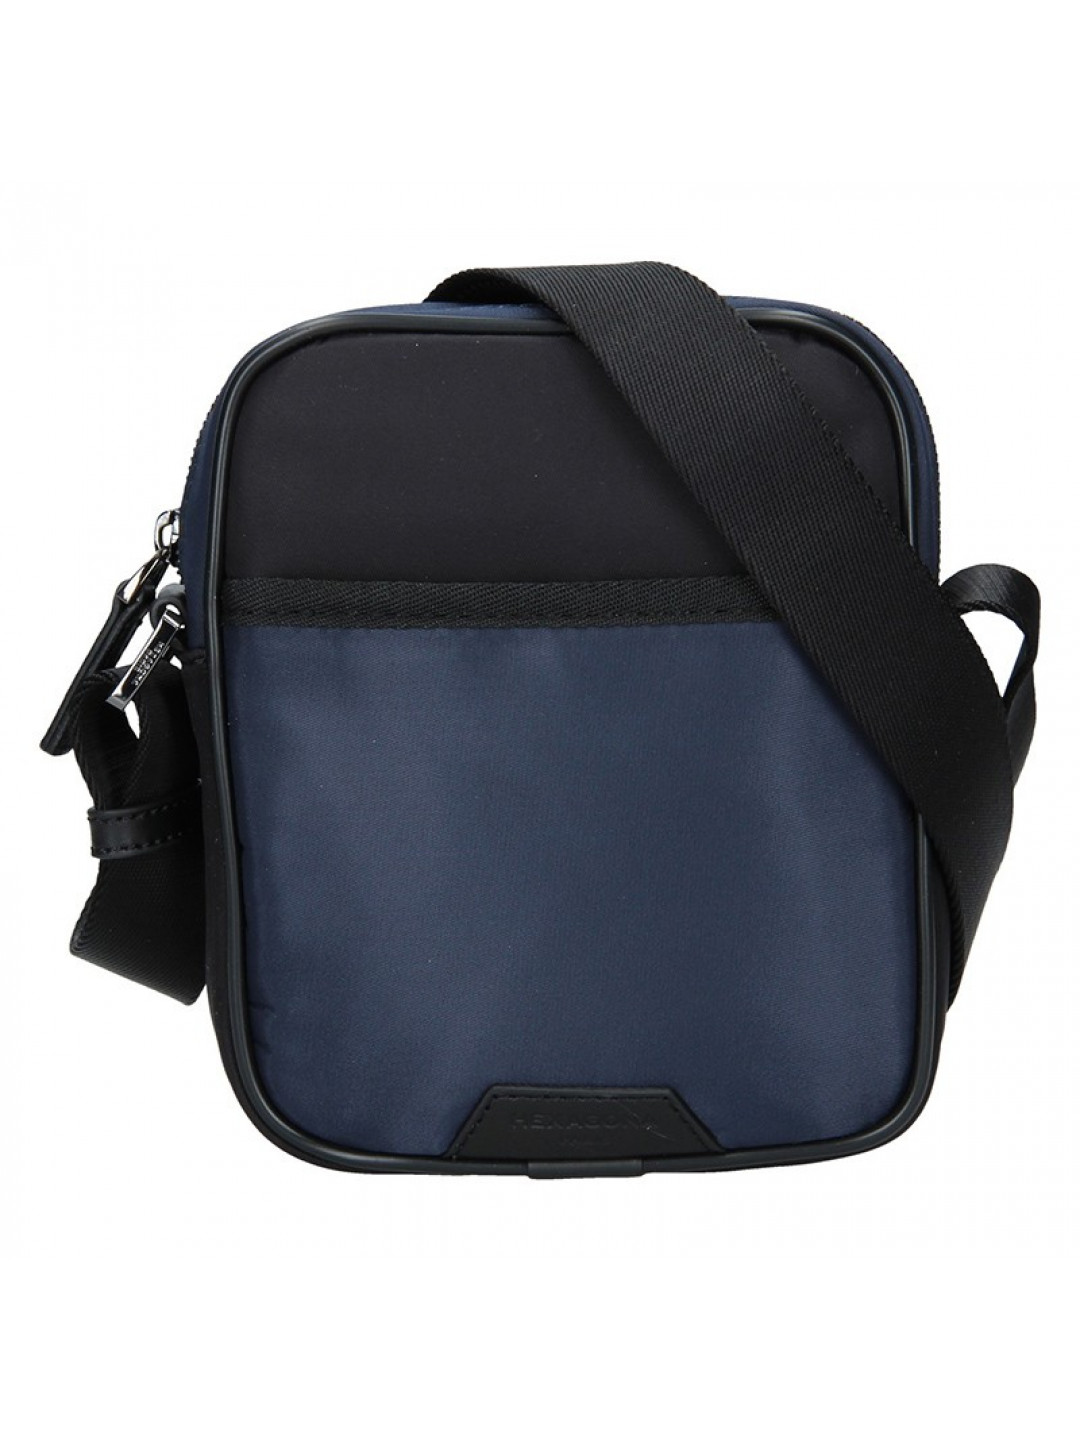 Pánská taška přes rameno Hexagona Bergh – černo-modrá